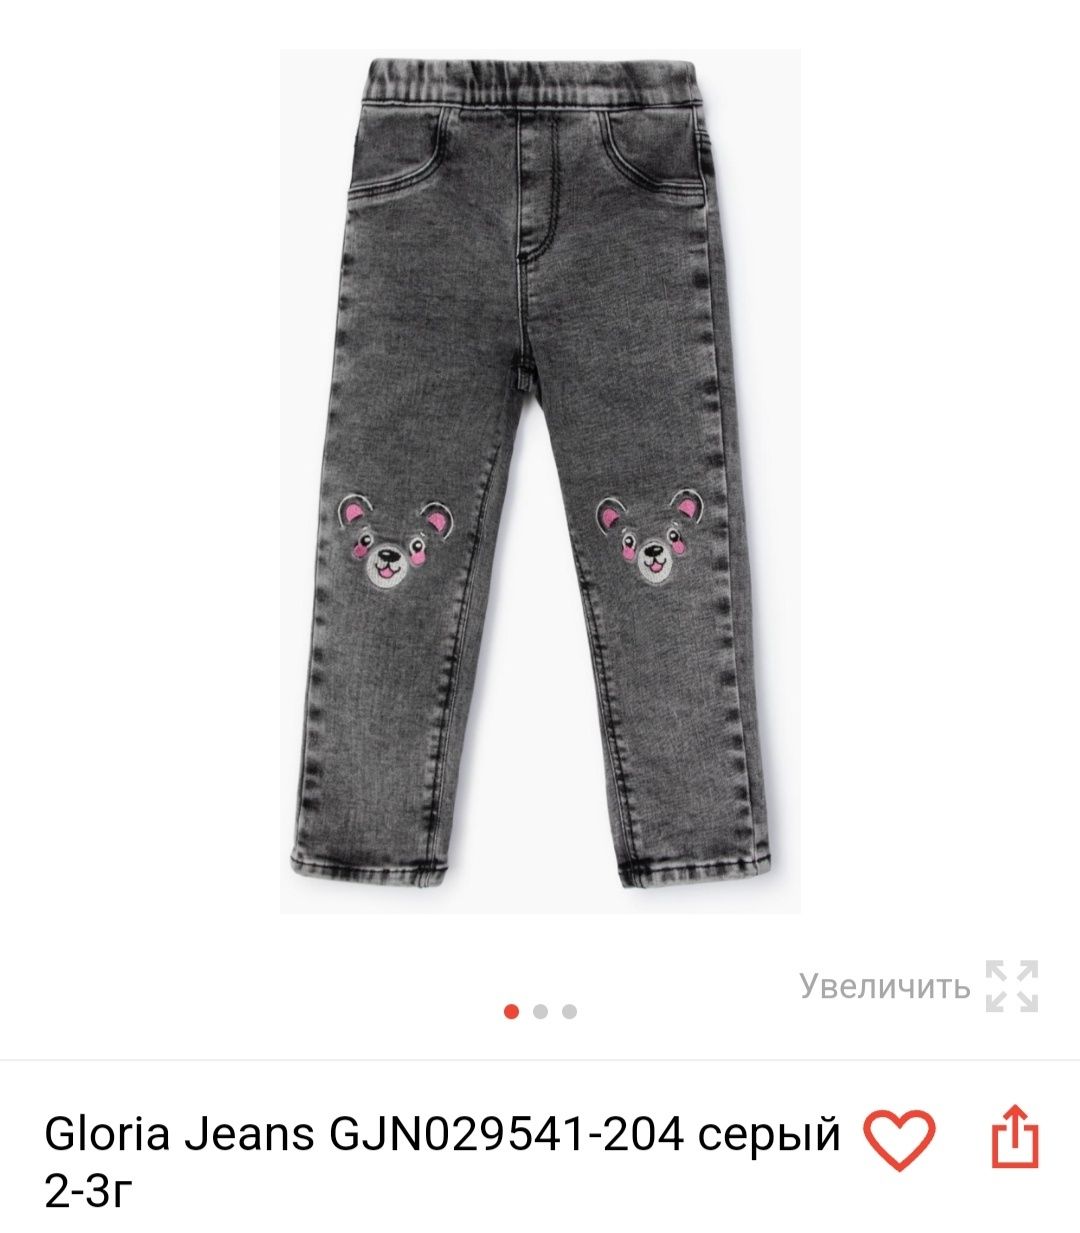 Детская одежда Gloria jeans